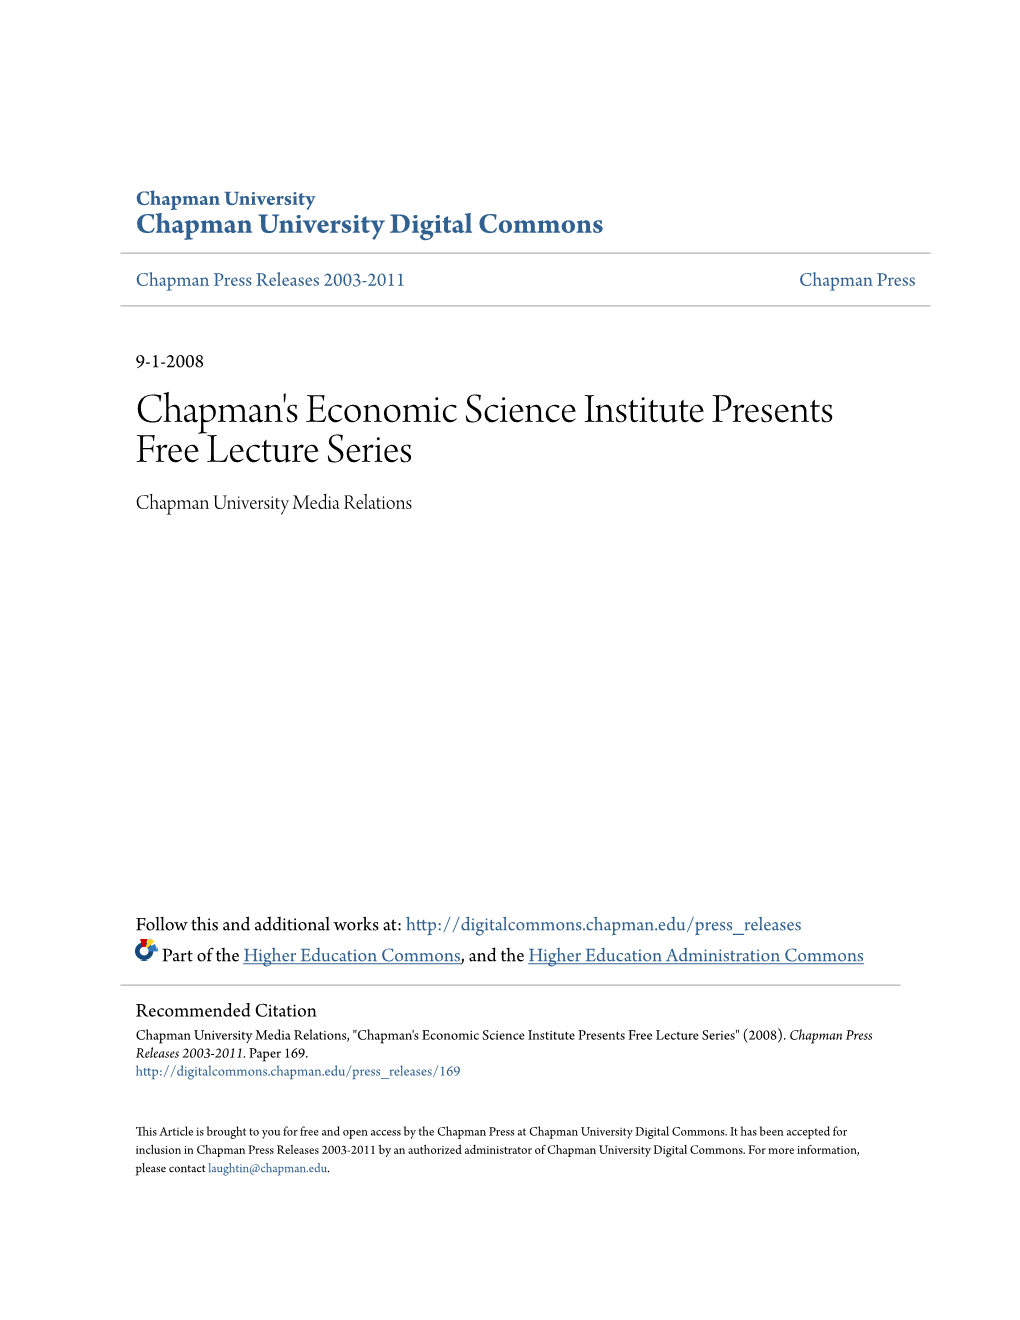 Chapman's Economic Science Institute Presents Free Lecture Series Chapman University Media Relations